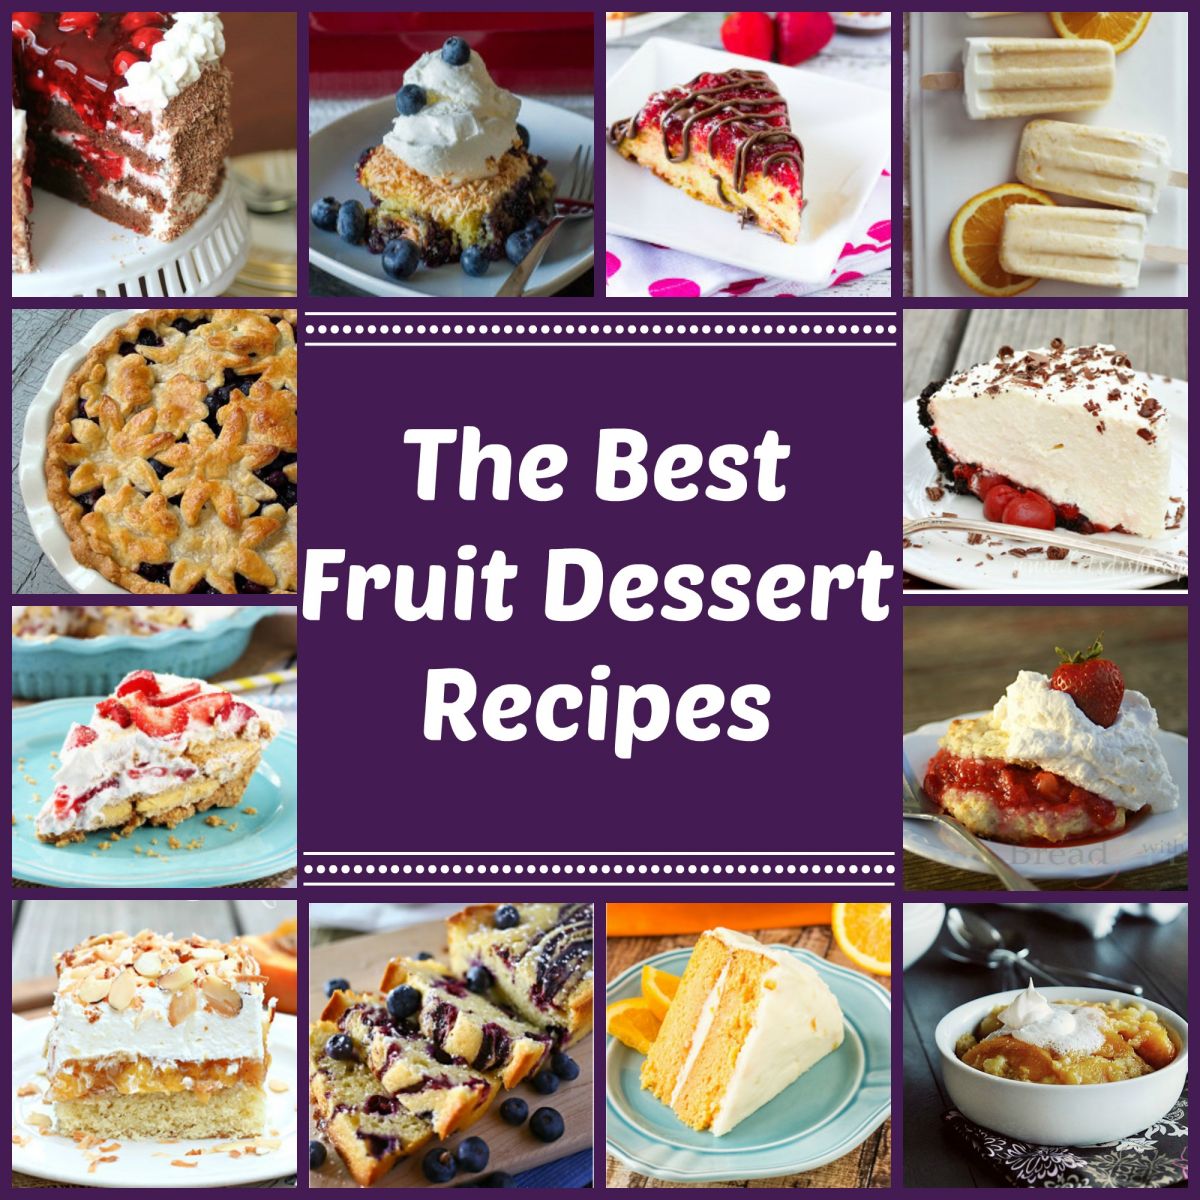 The Best Fruit Dessert Recipes